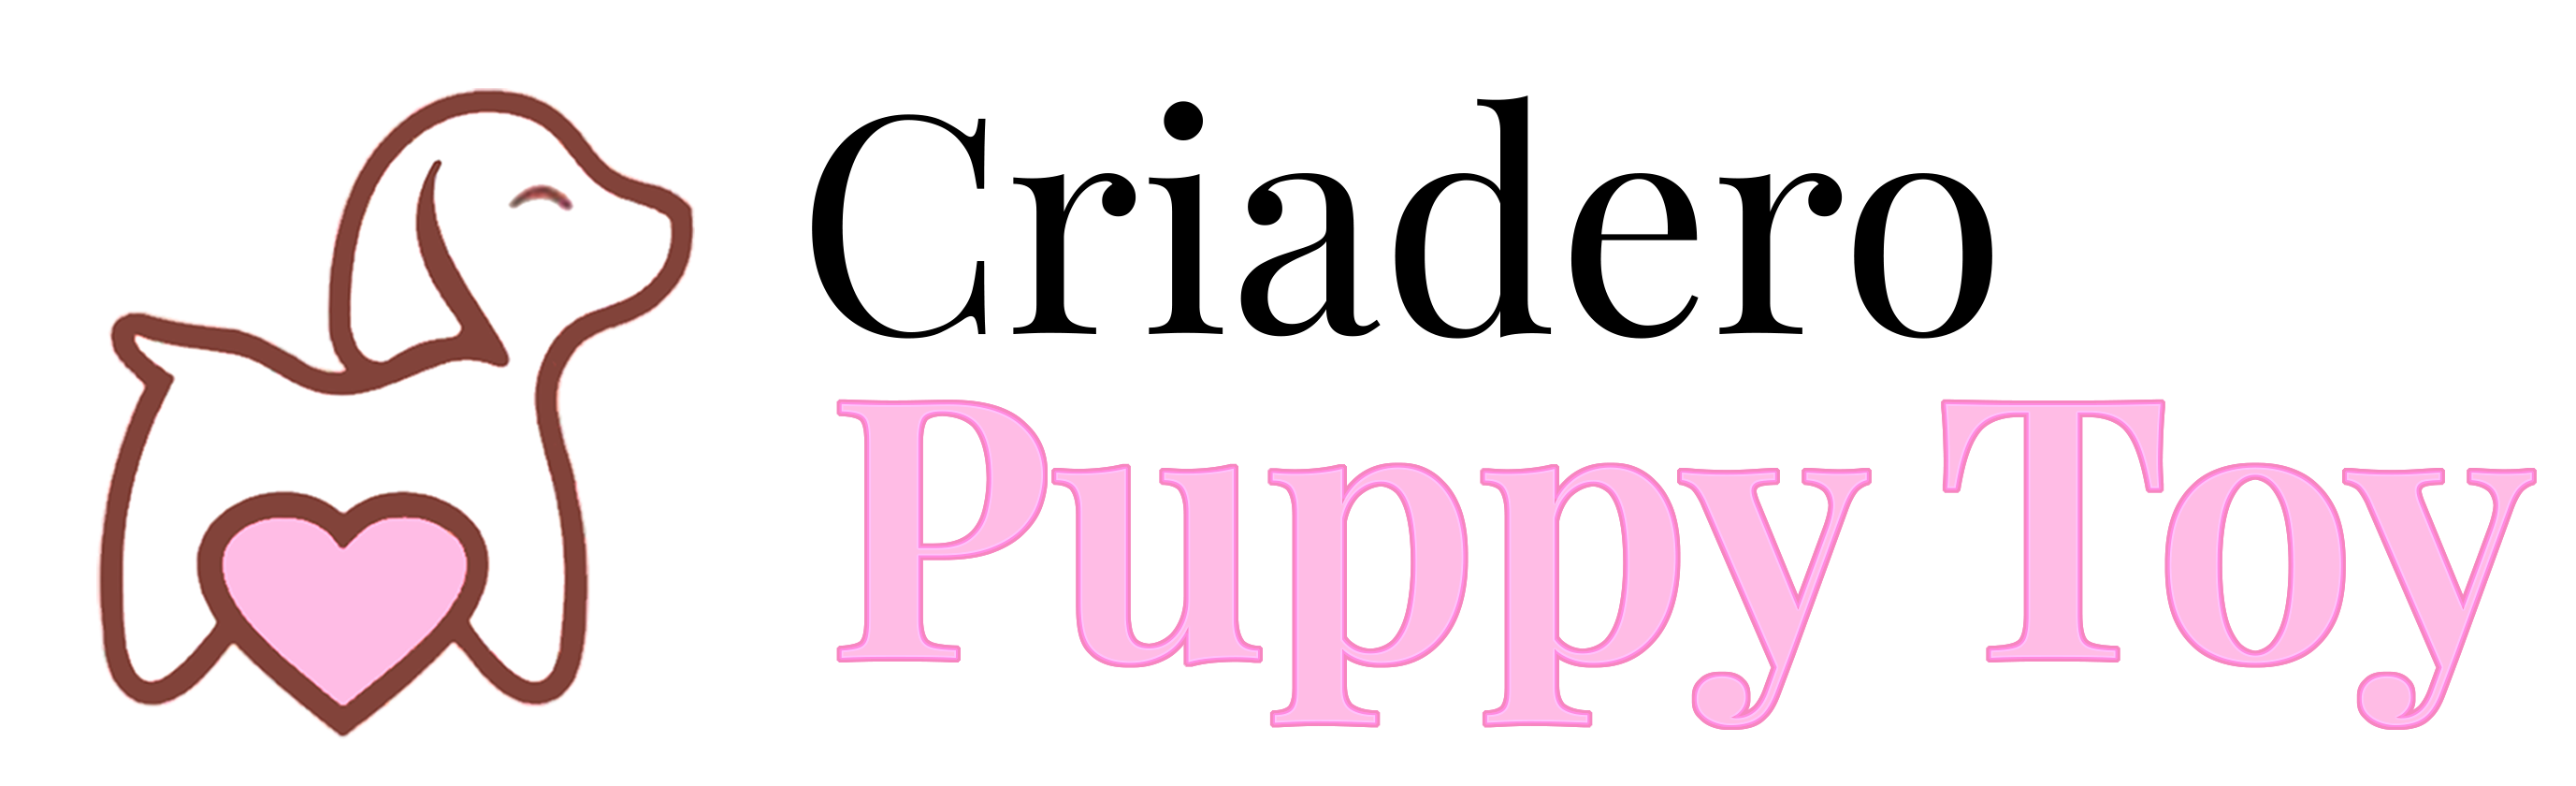 Criadero Puppy Toy